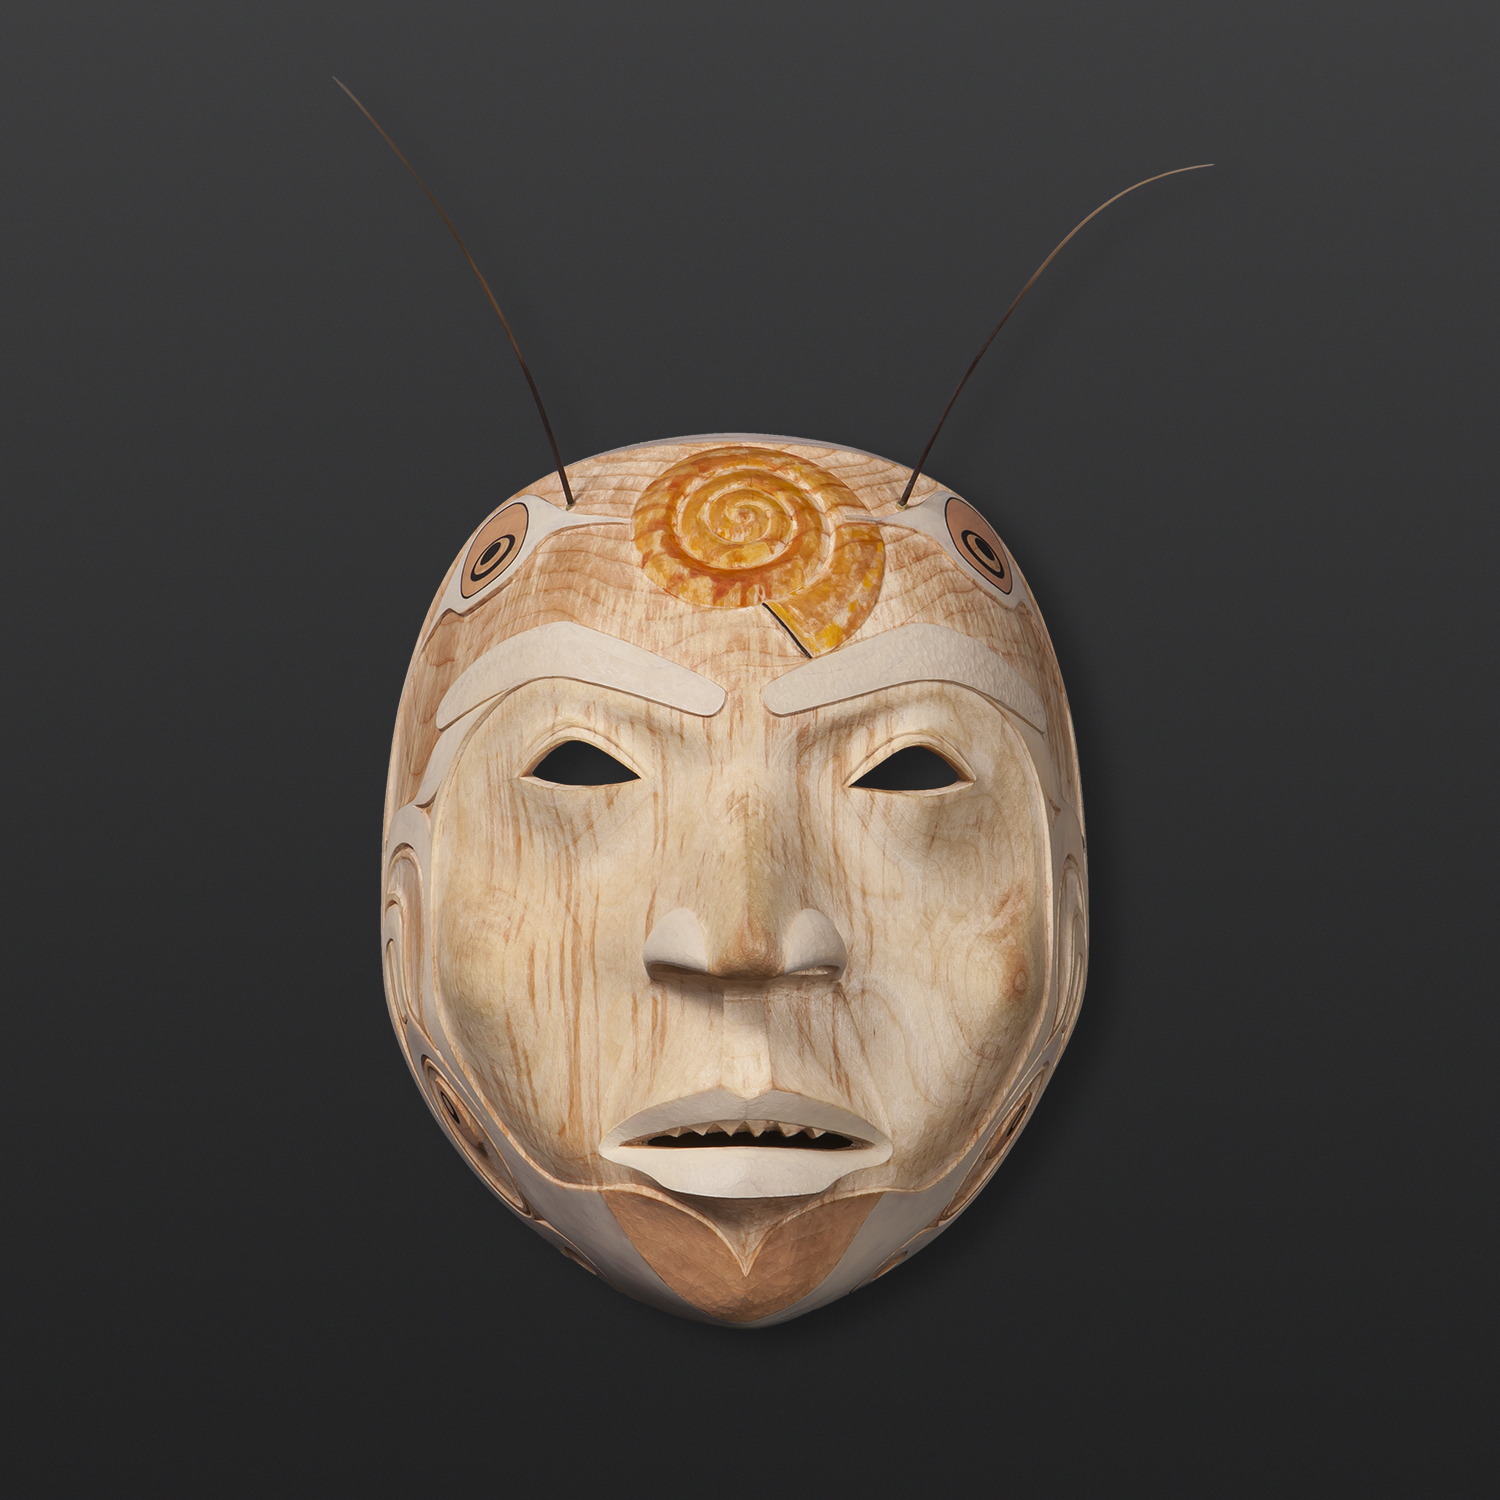 Prince Snail Shawn Aster Tsimshian Yellow cedar, paint, sea lion whiskers $5500